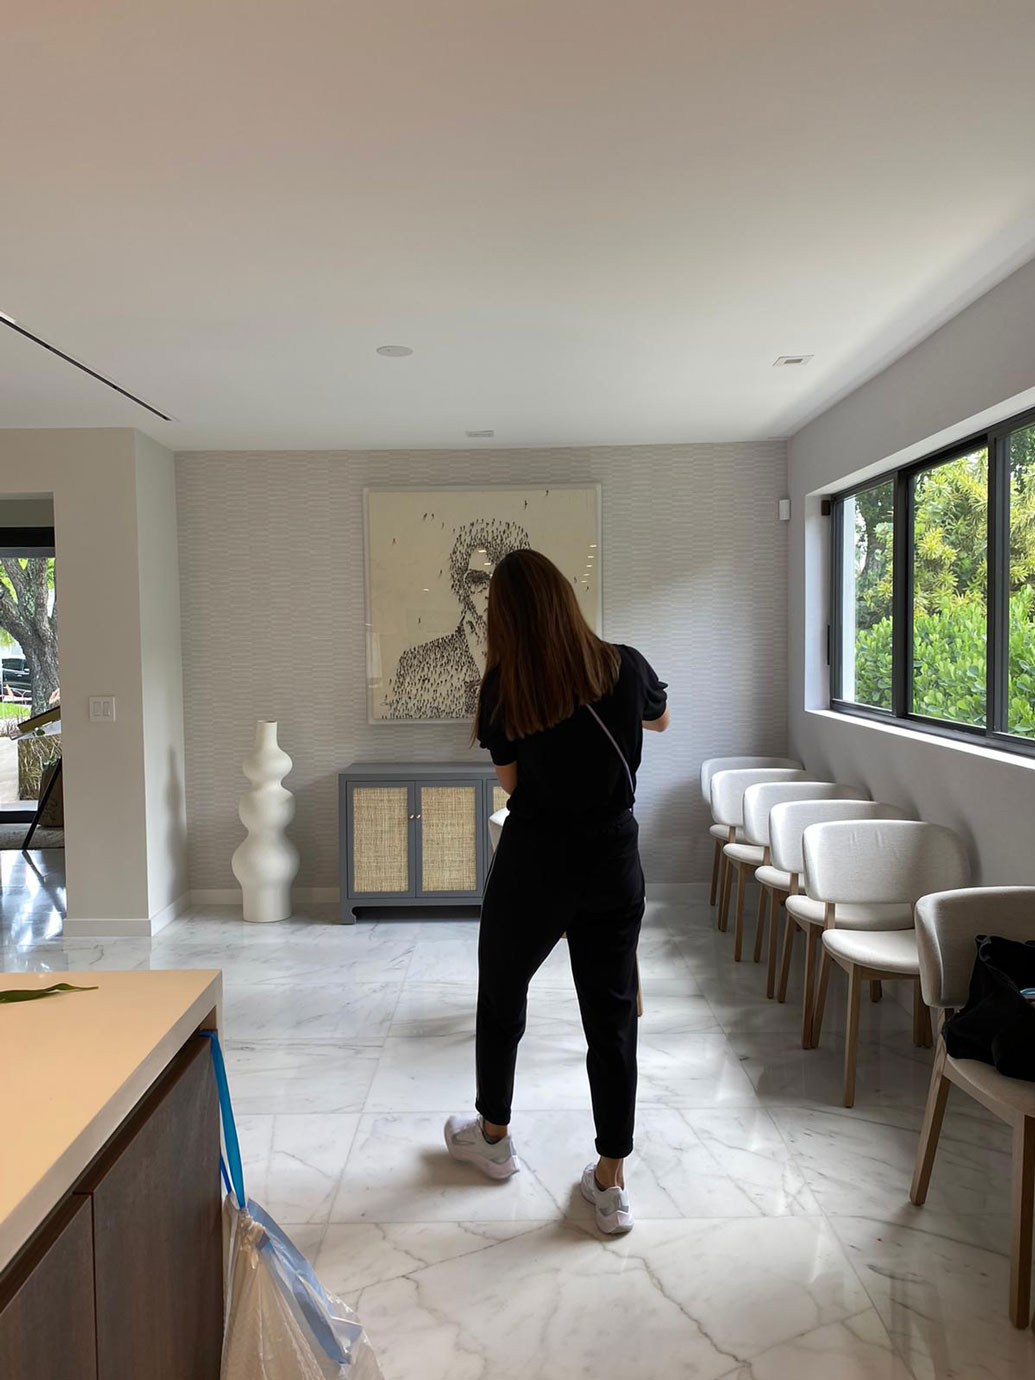 Miami Home Design: Relocating During the Coronavirus Pandemic